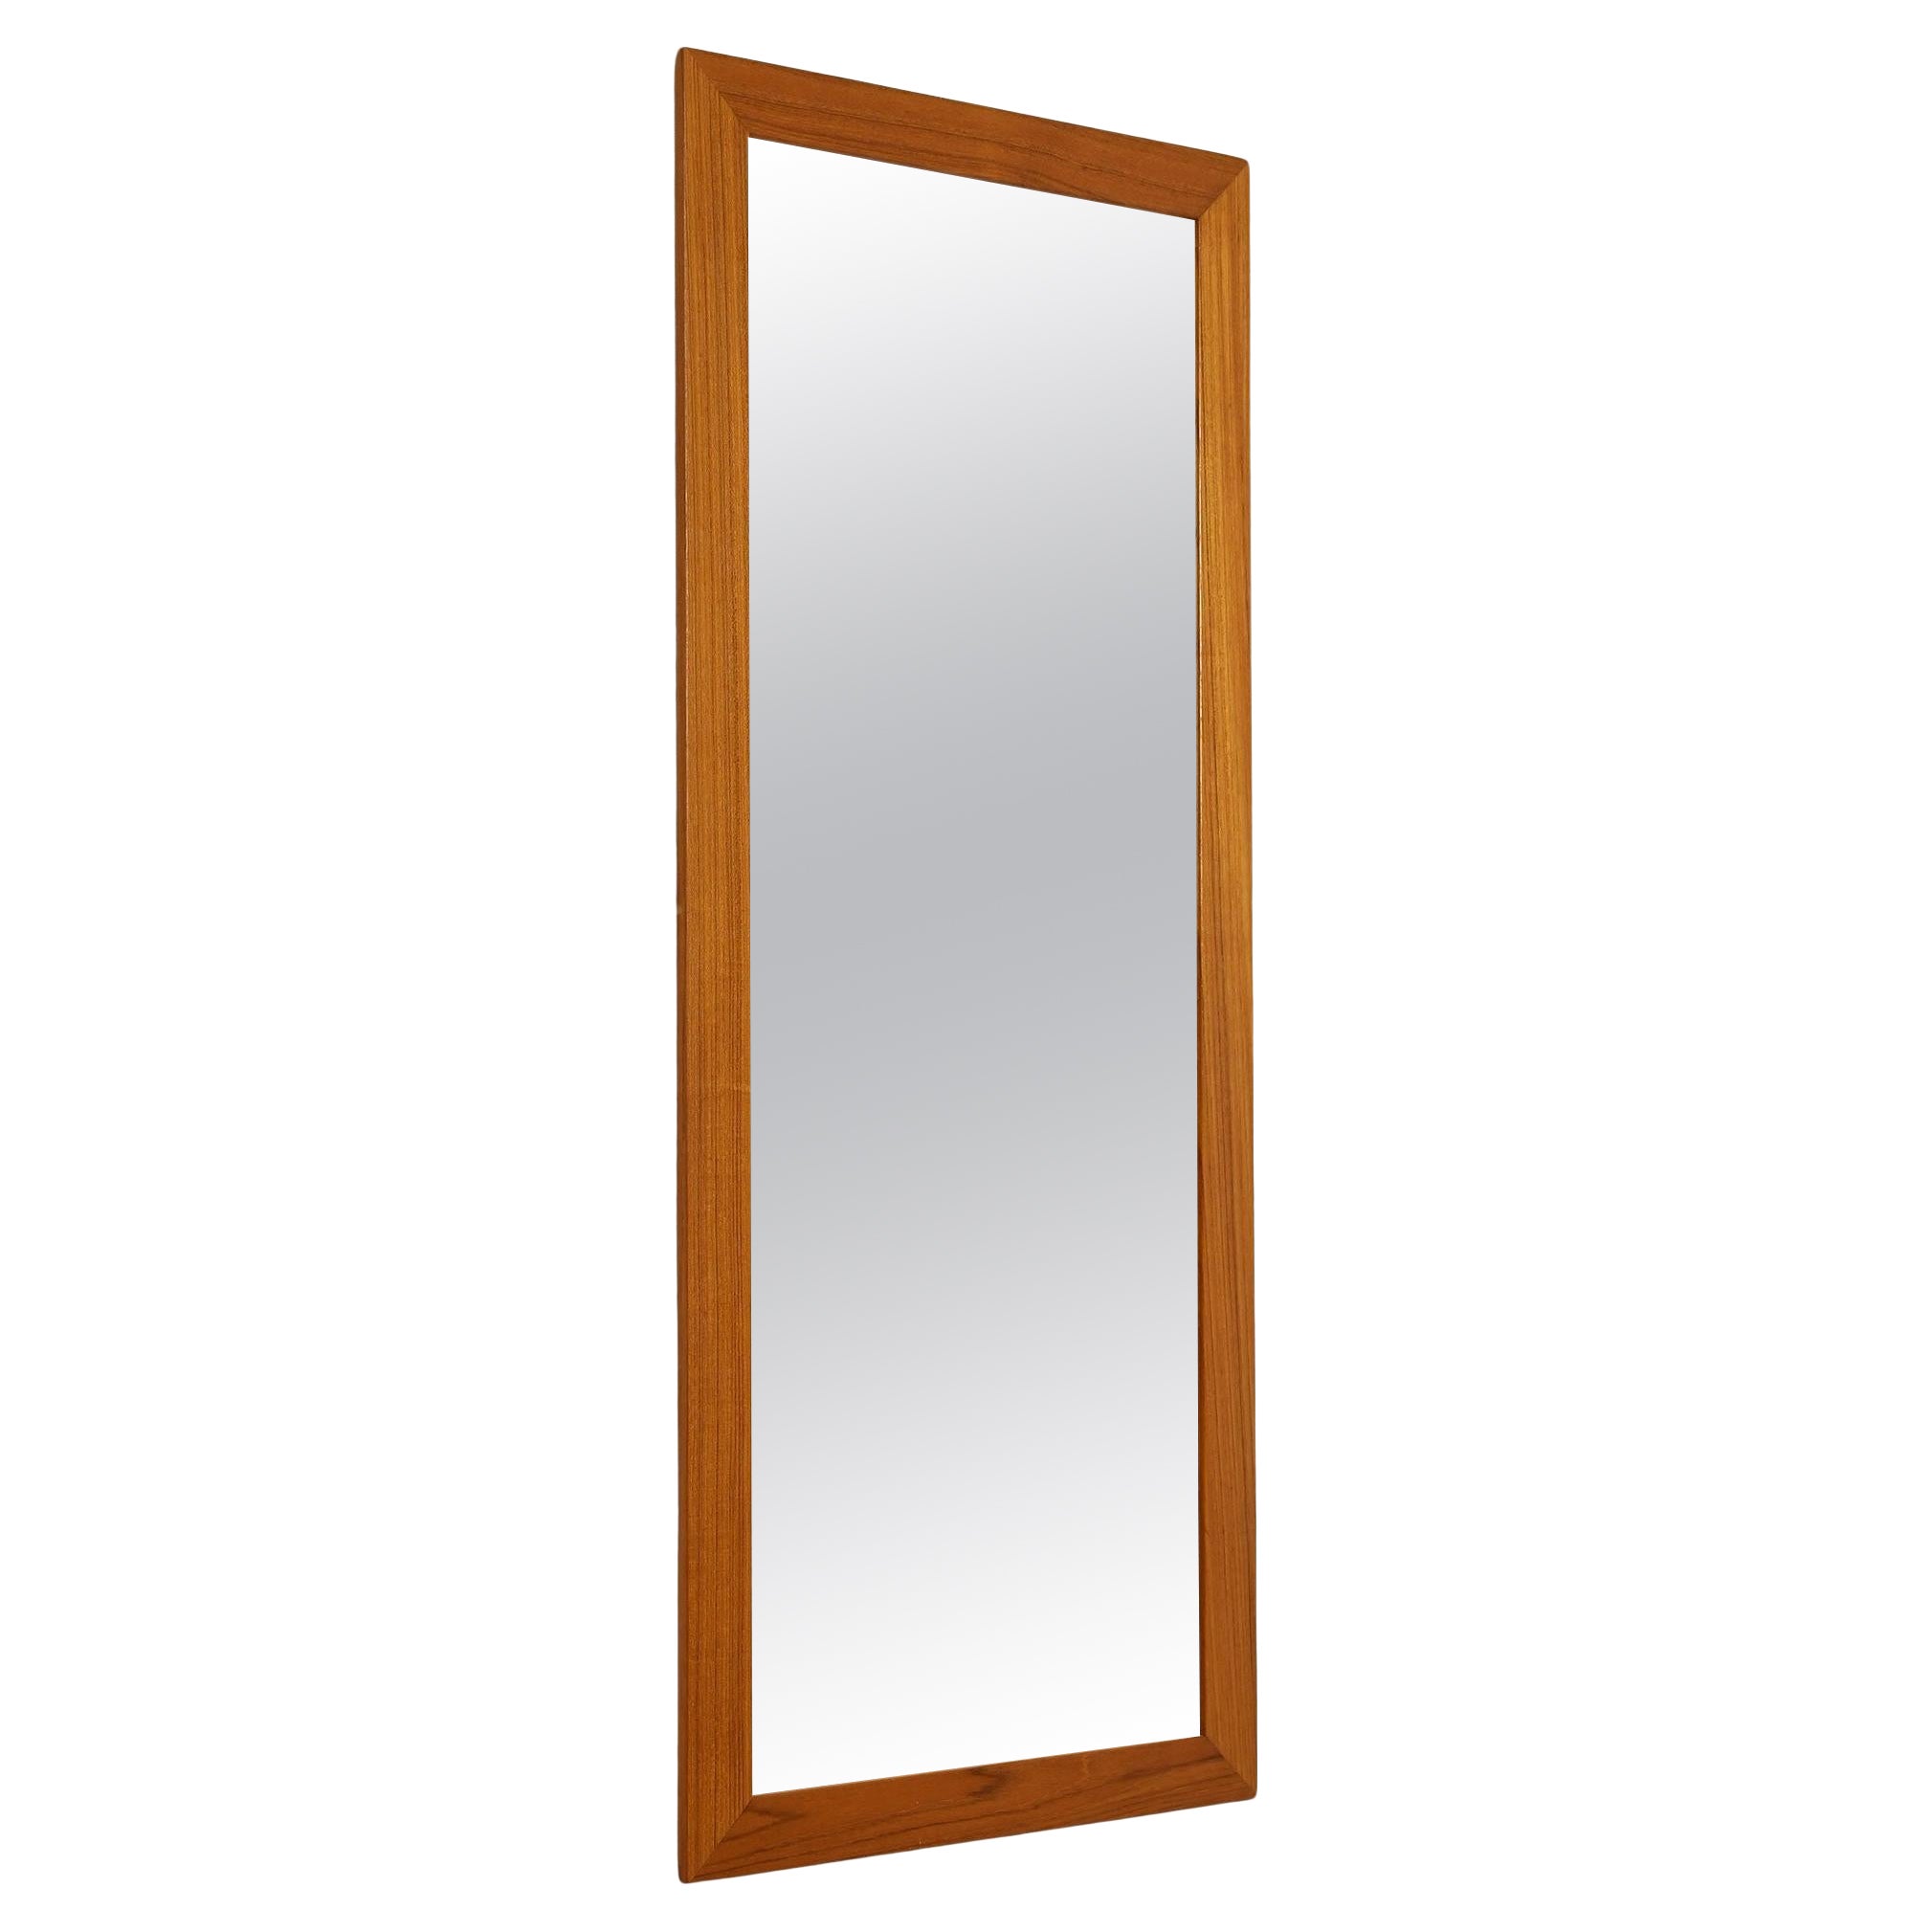 Teak framed mirror For Sale